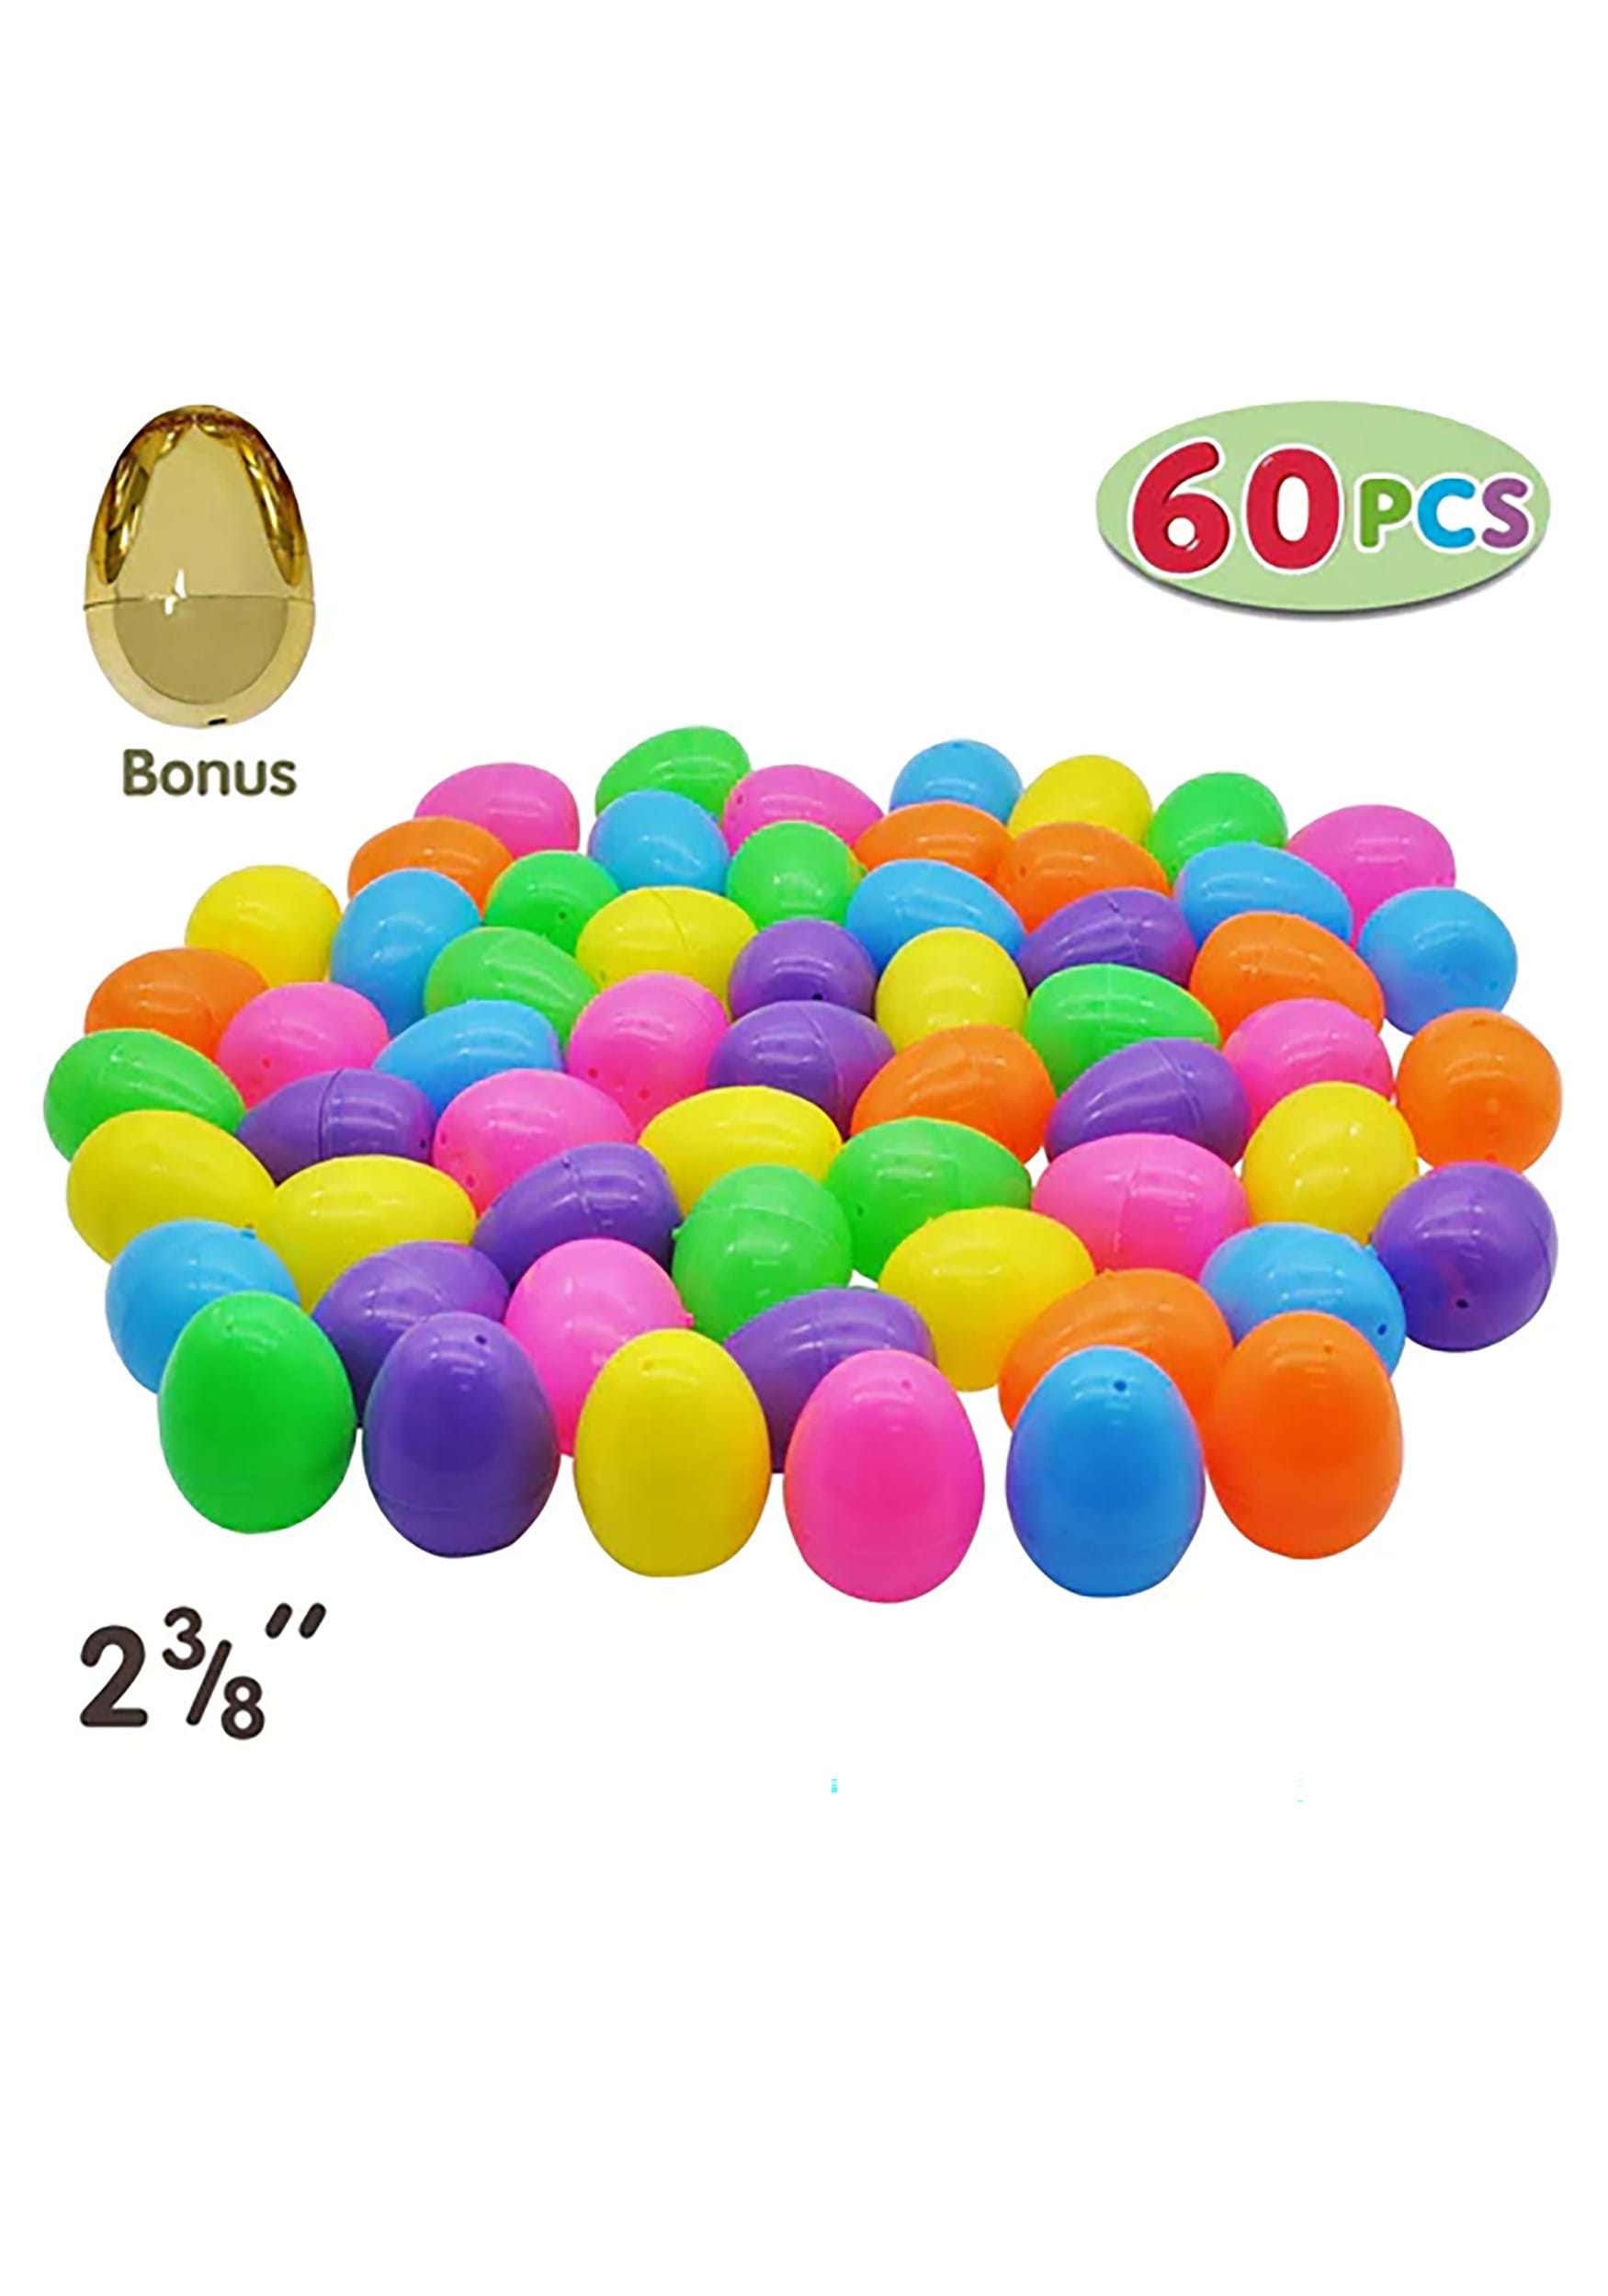 60 Pcs 2.4 Traditional Colorful Egg Shells